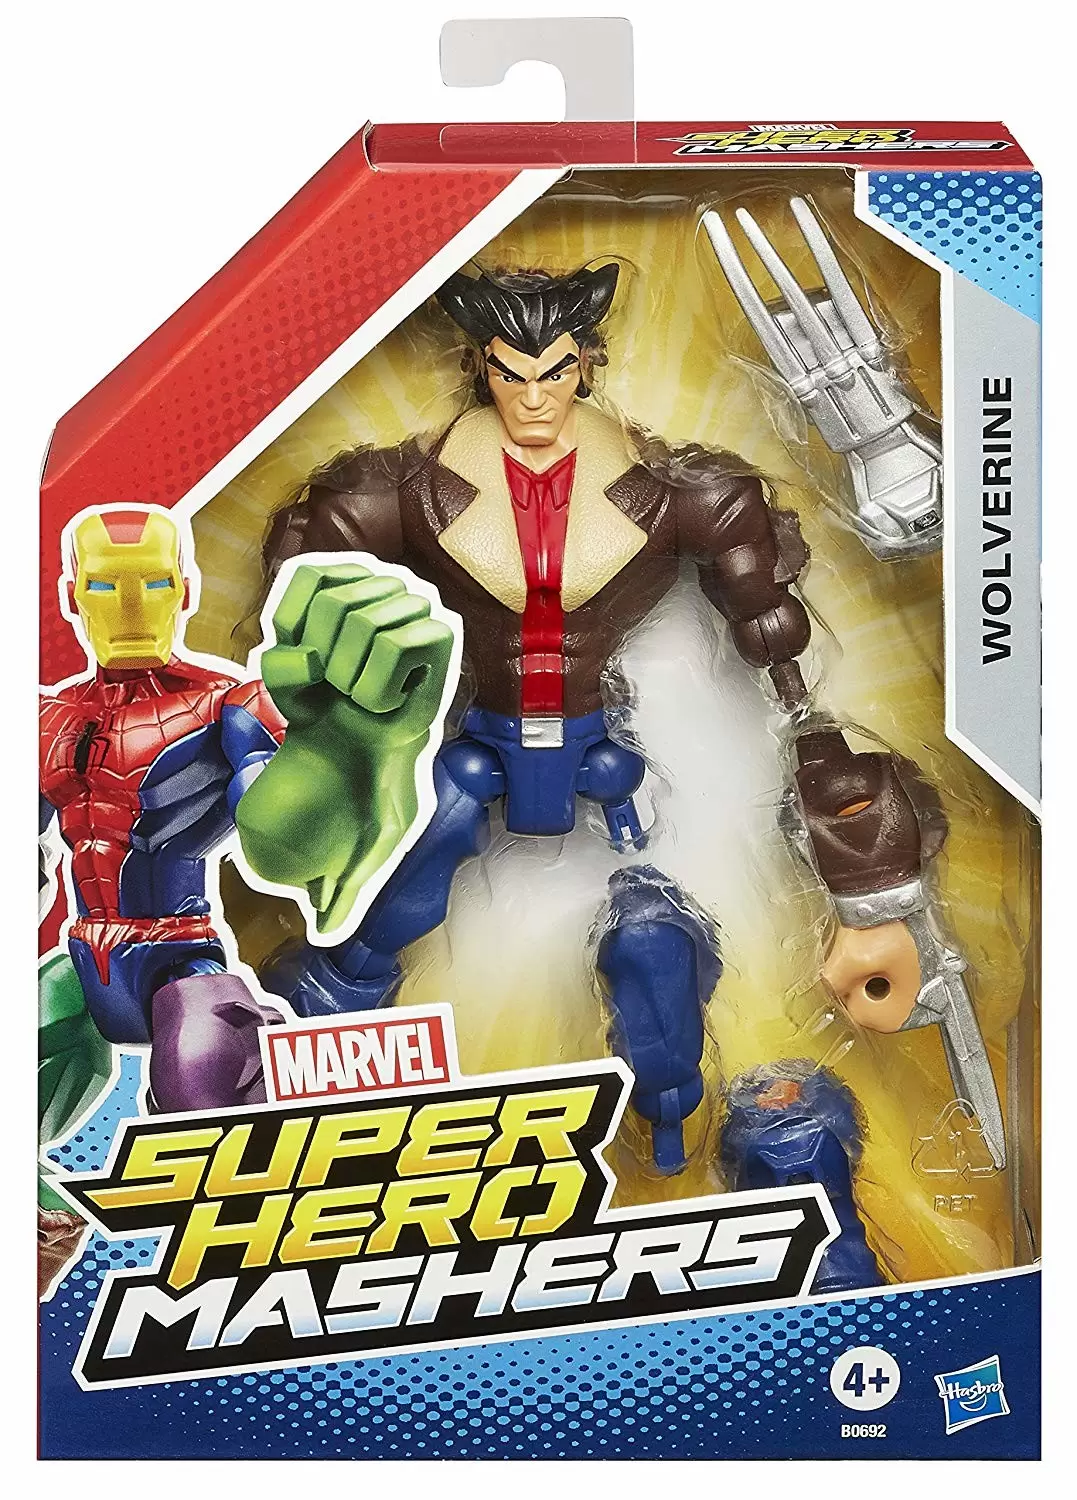 Marvel Super Hero Mashers Wolverine Figure A8856000 for sale online 